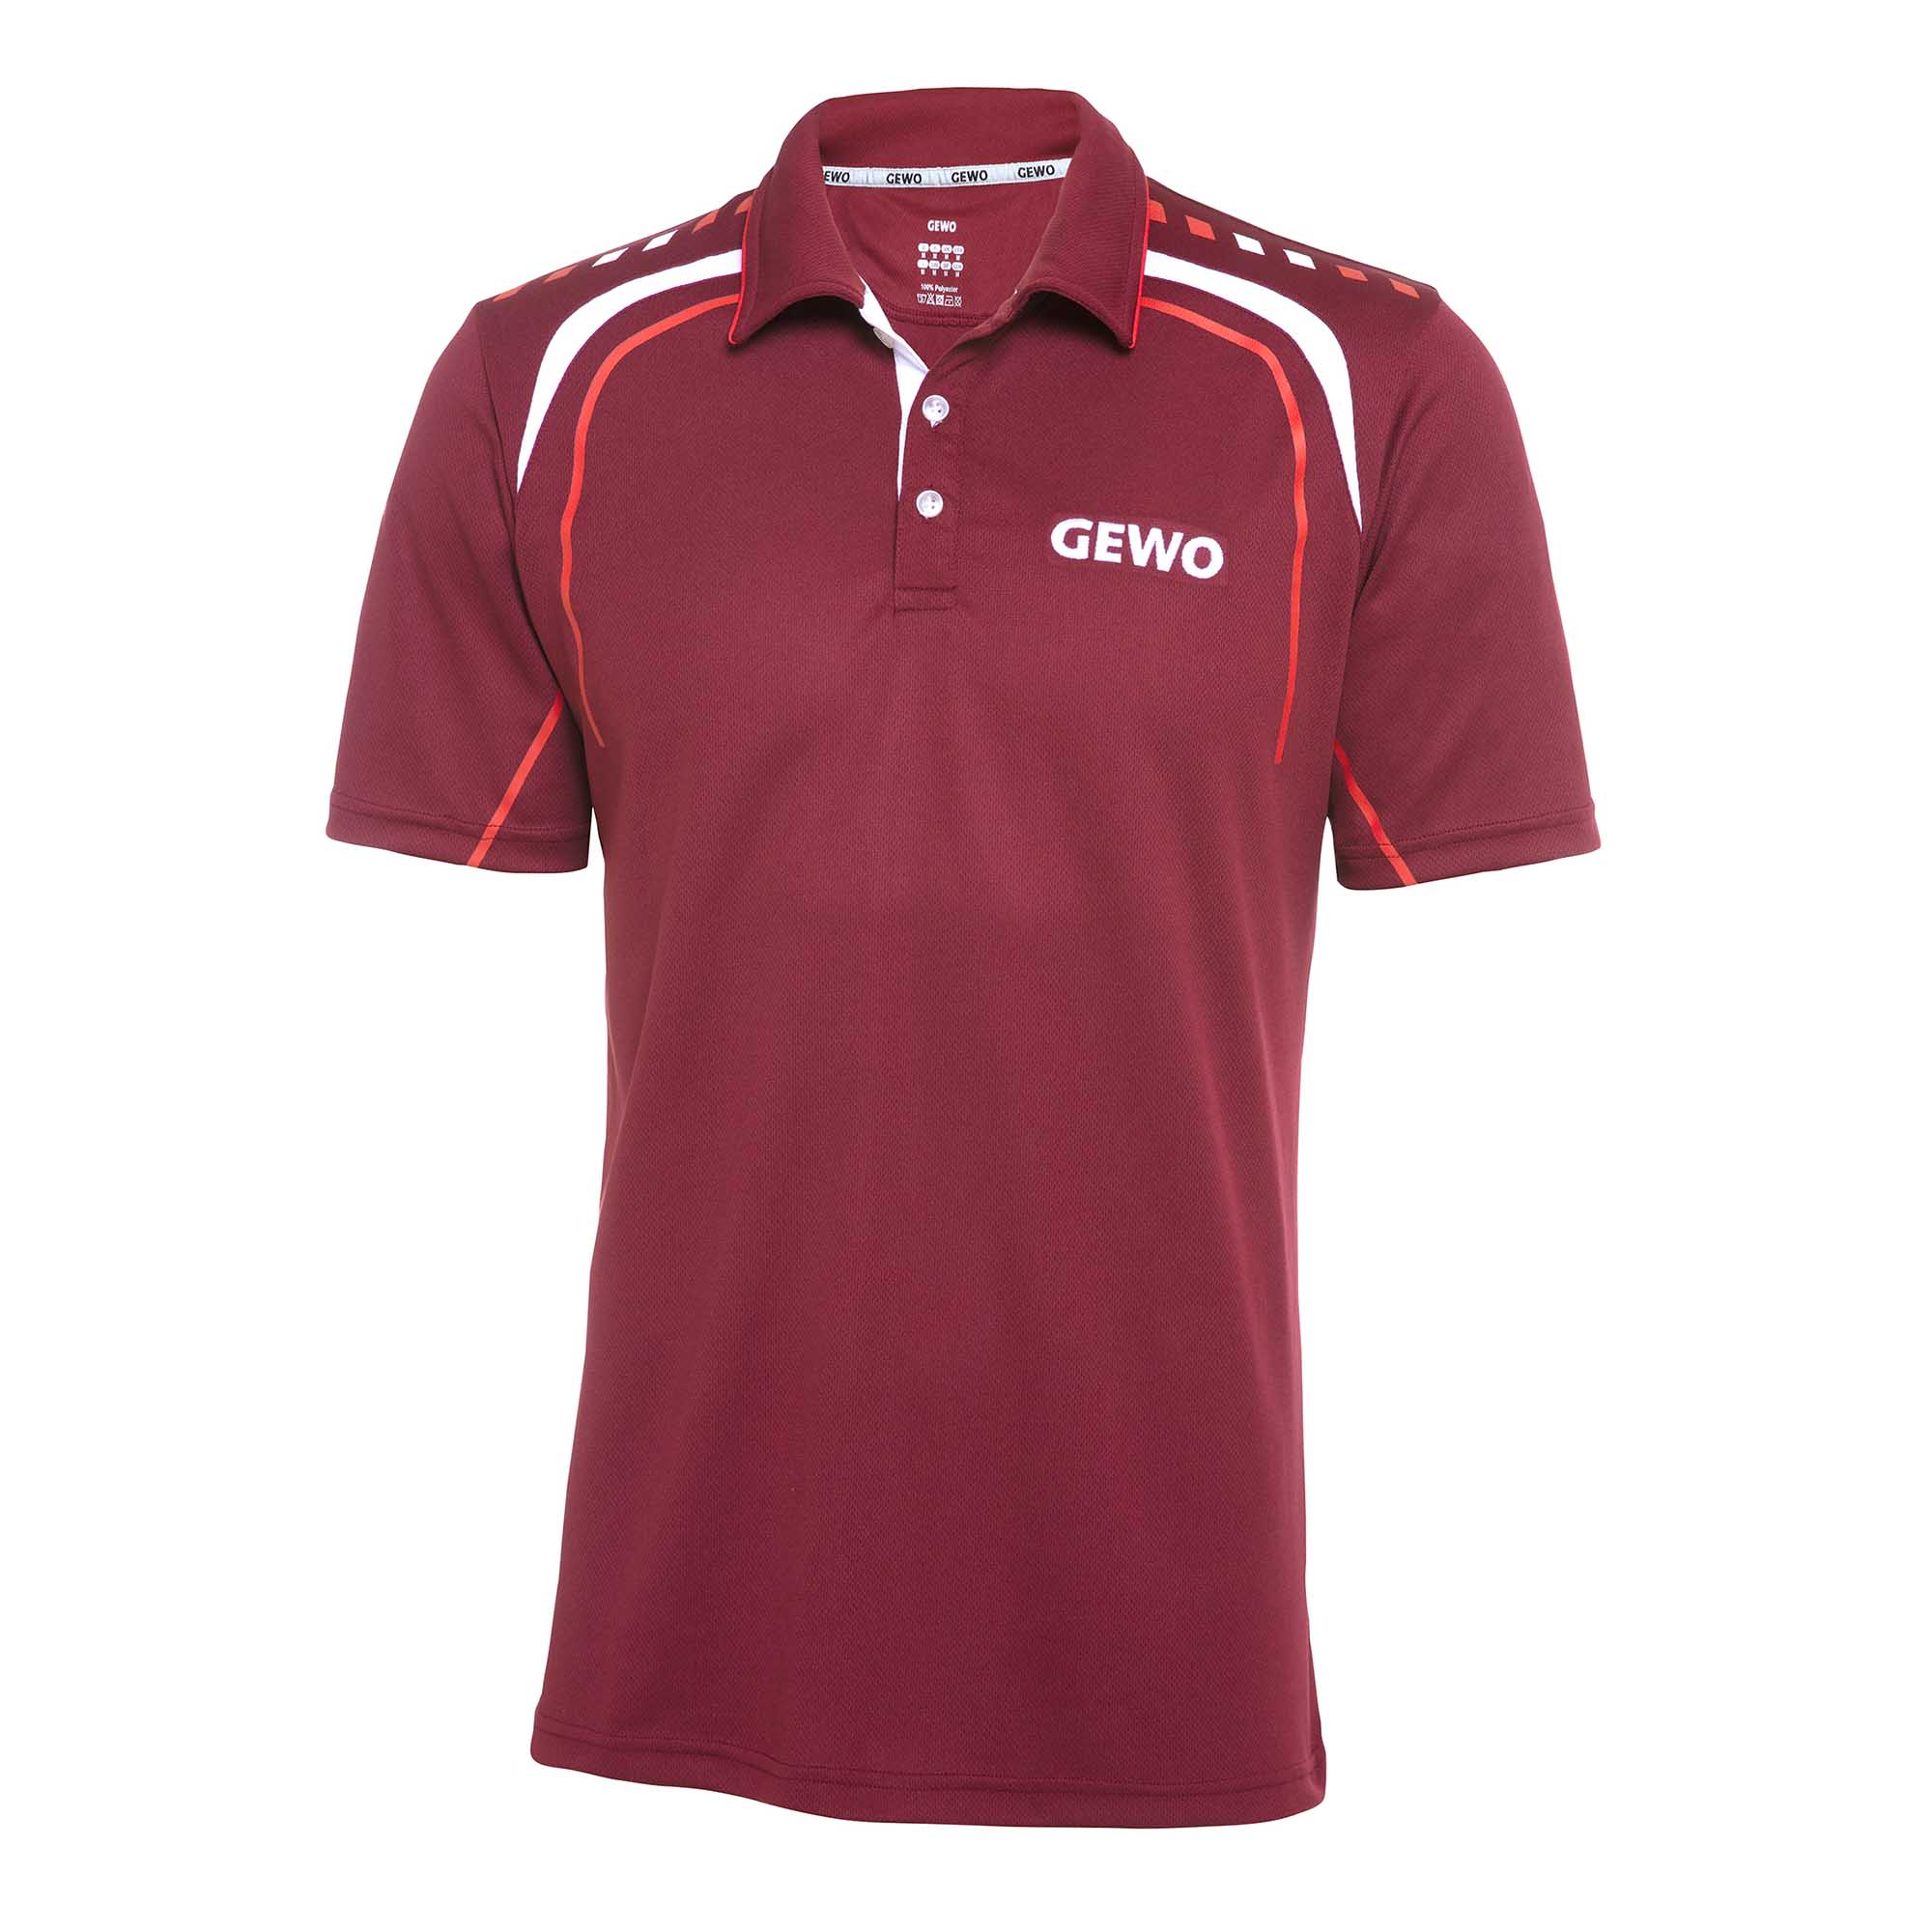 GEWO Shirt Aversa S18-5 bordeaux/red XXXS